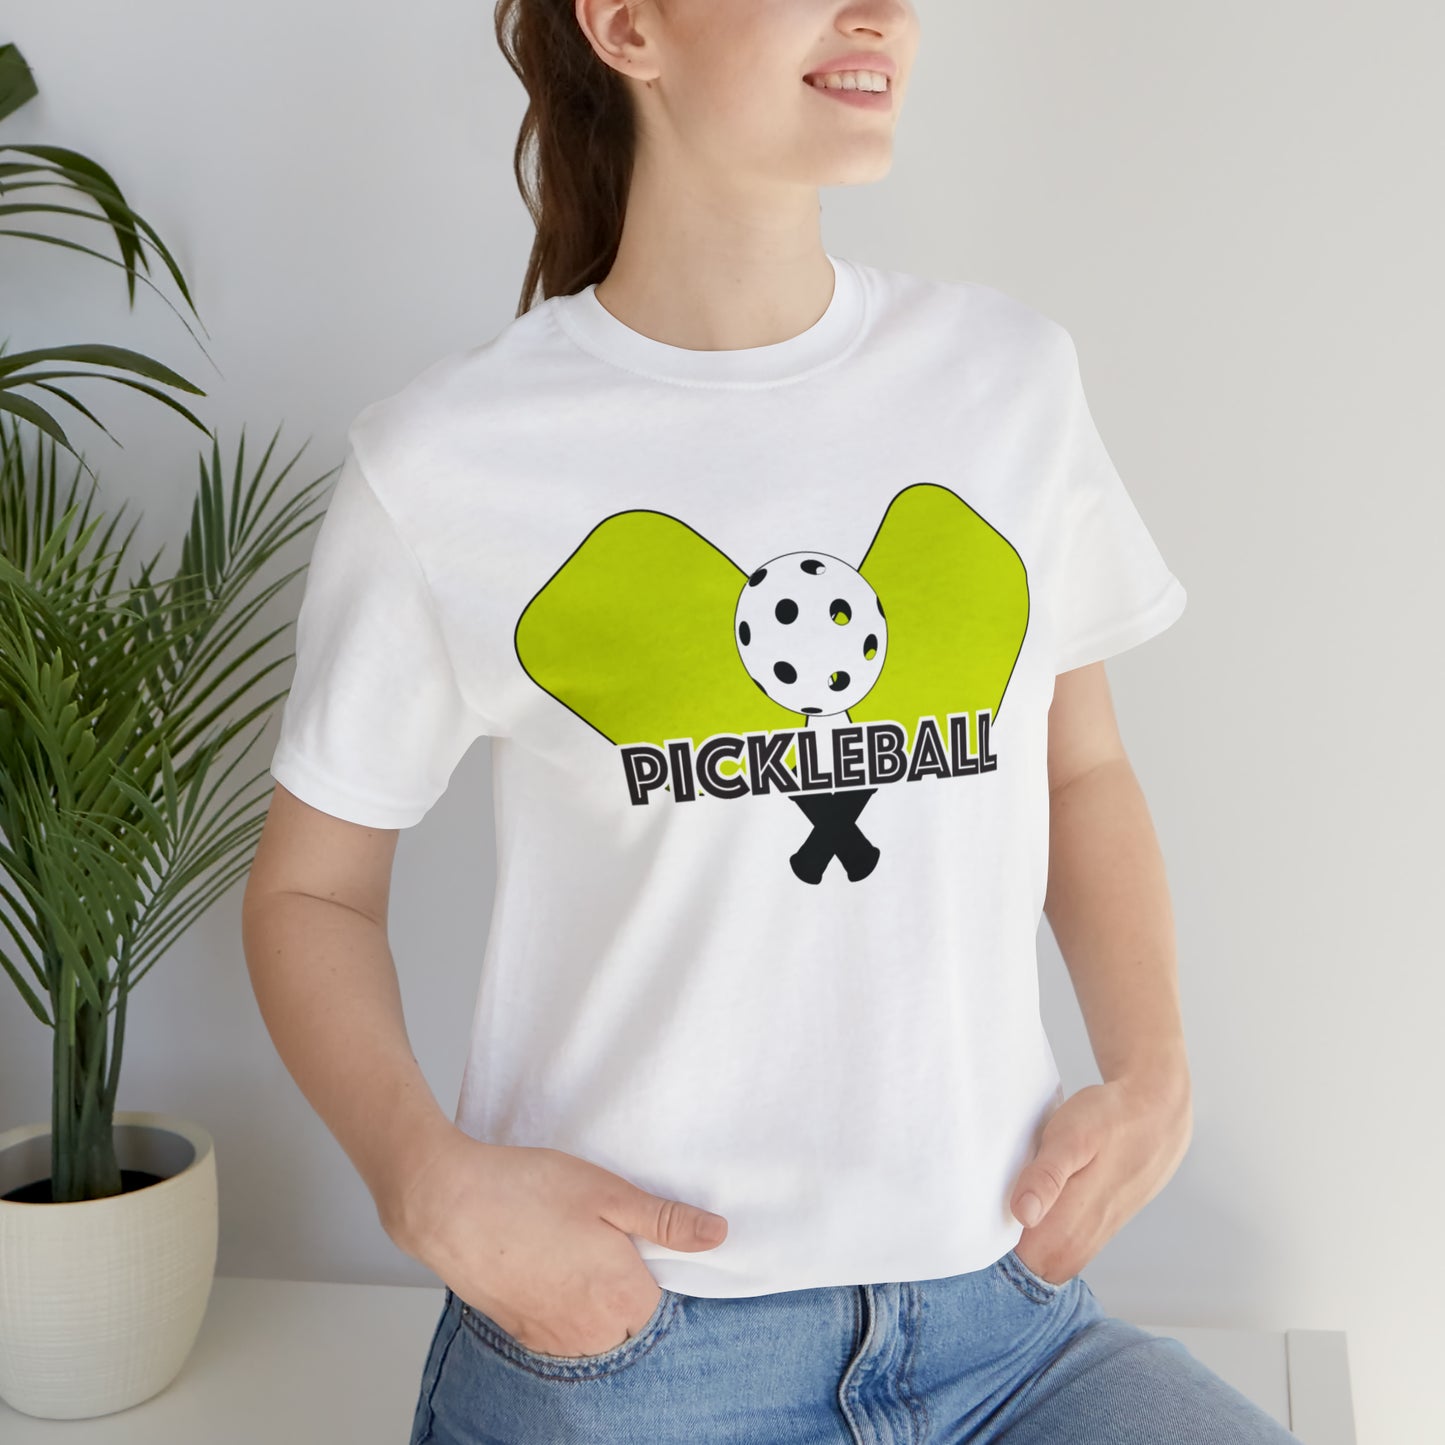 Pickleball Player Fun-Loving T-Shirt